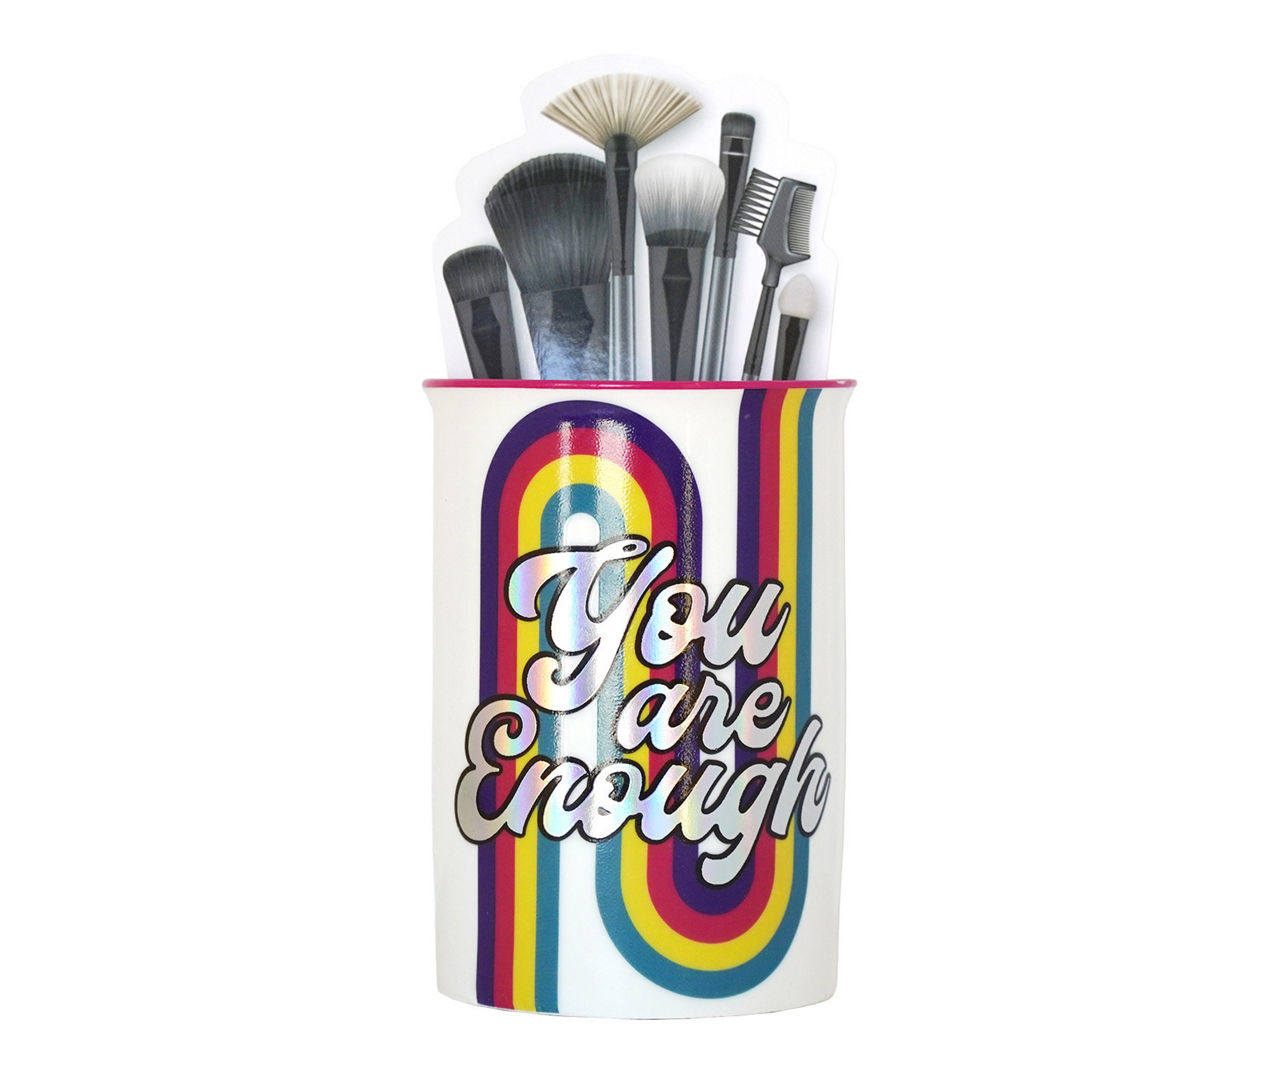 "You Are Enough" Ceramic Makeup Brush Holder